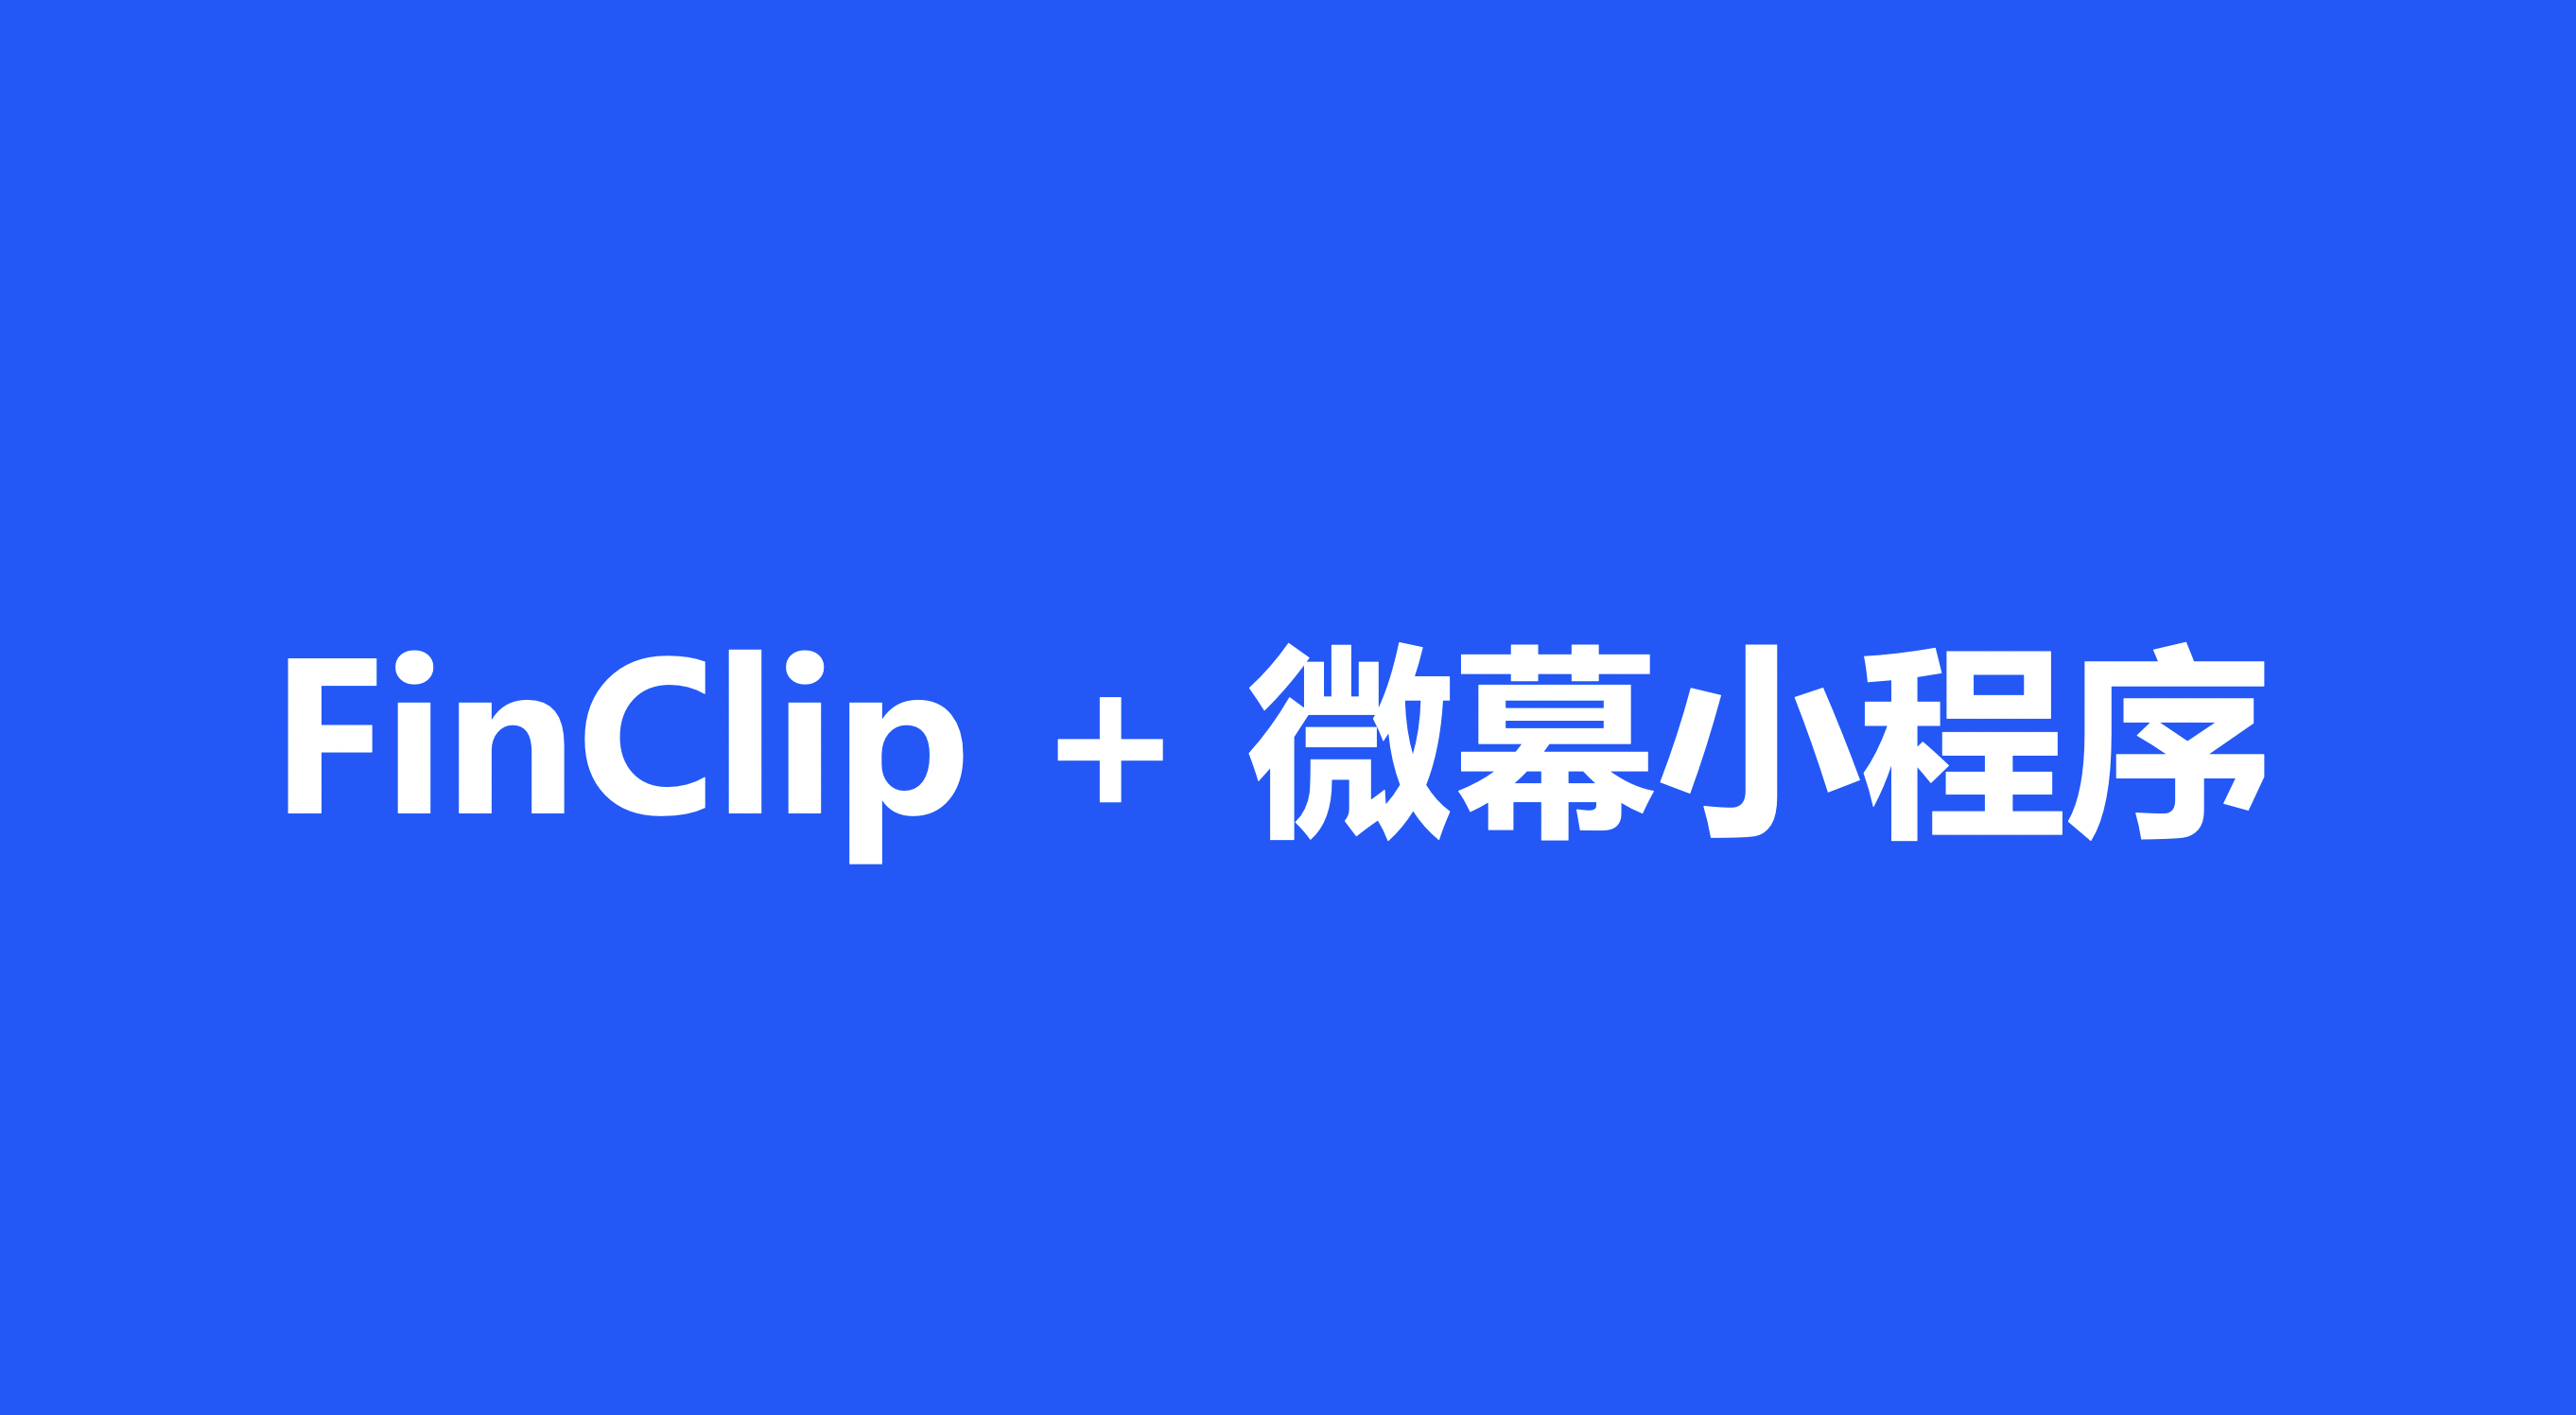 FinClip+微幕小程序，助力企业全端公私域流量互通